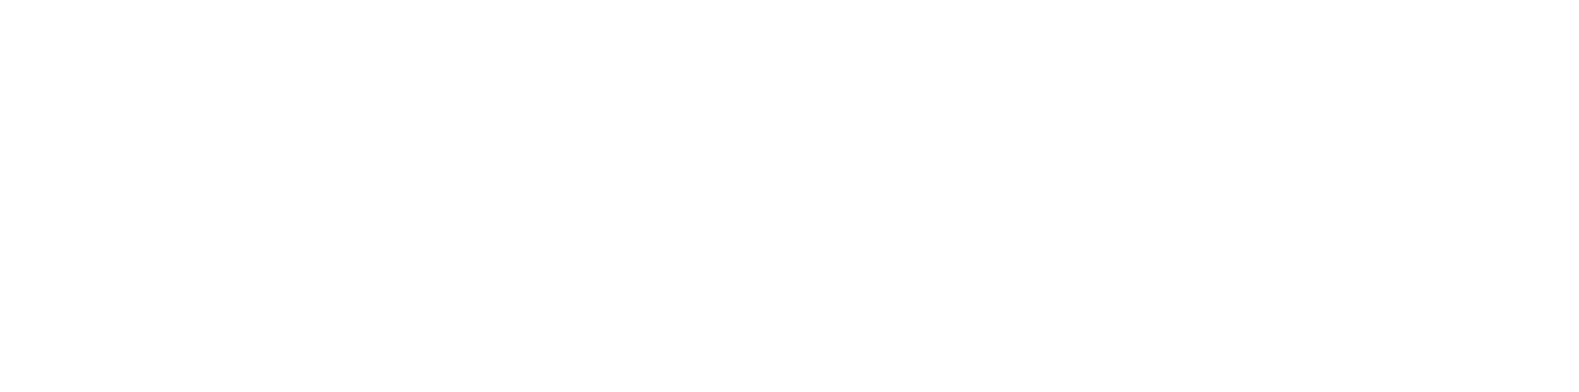 Healthcare Services Group Logo groß für dunkle Hintergründe (transparentes PNG)